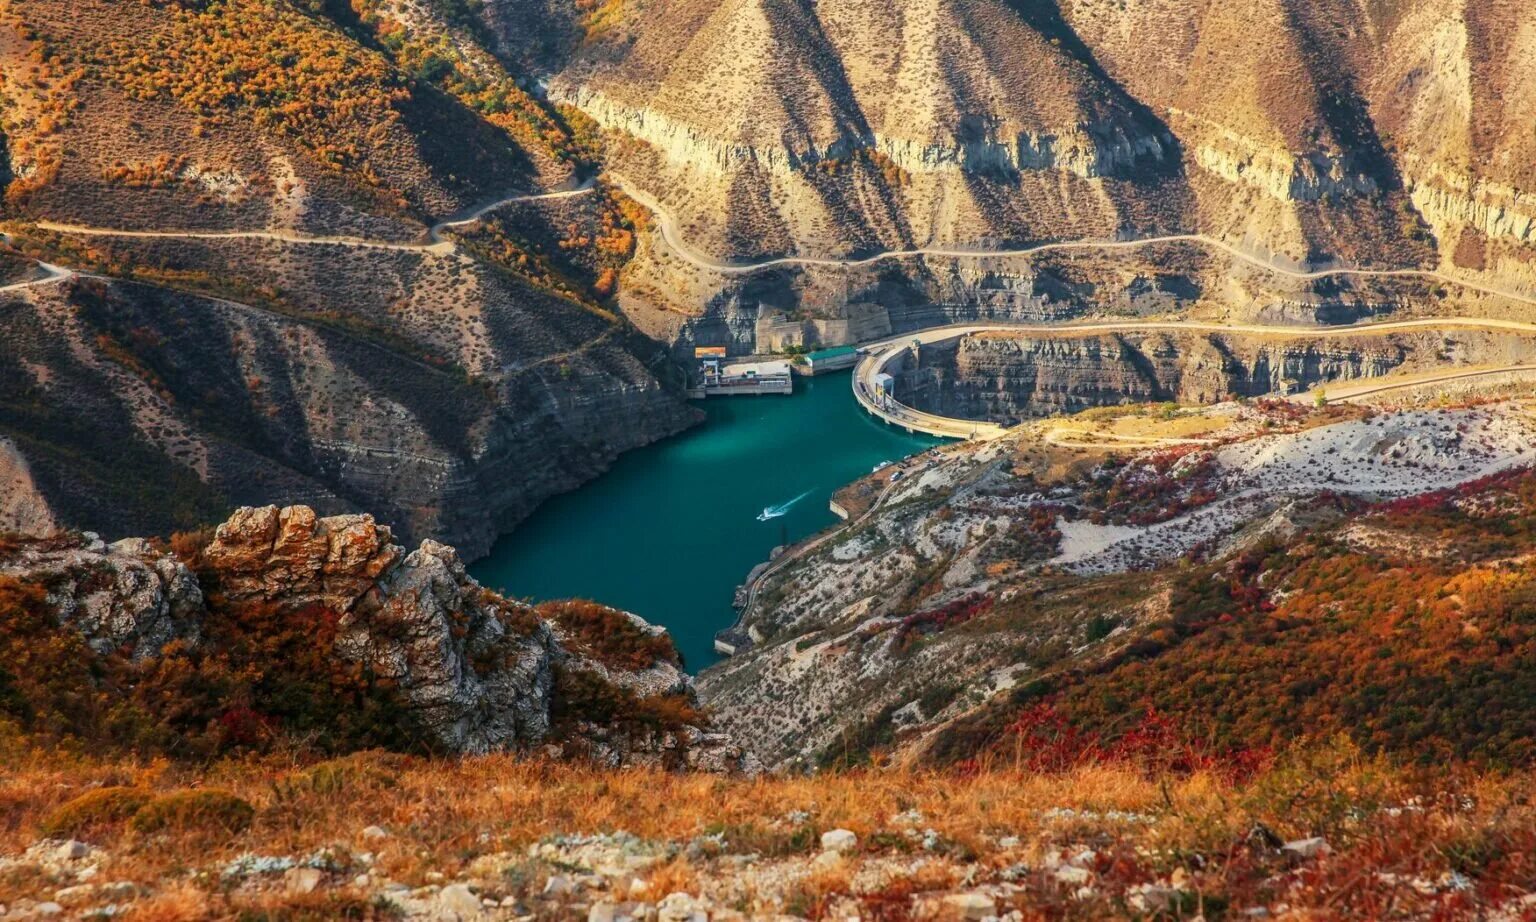 Сулакский каньон в Дагестане. Сулакский каньон Махачкала. Каньен чулатсий Дагестан. Слуцкий каньон Дагестан. Каньон судакский